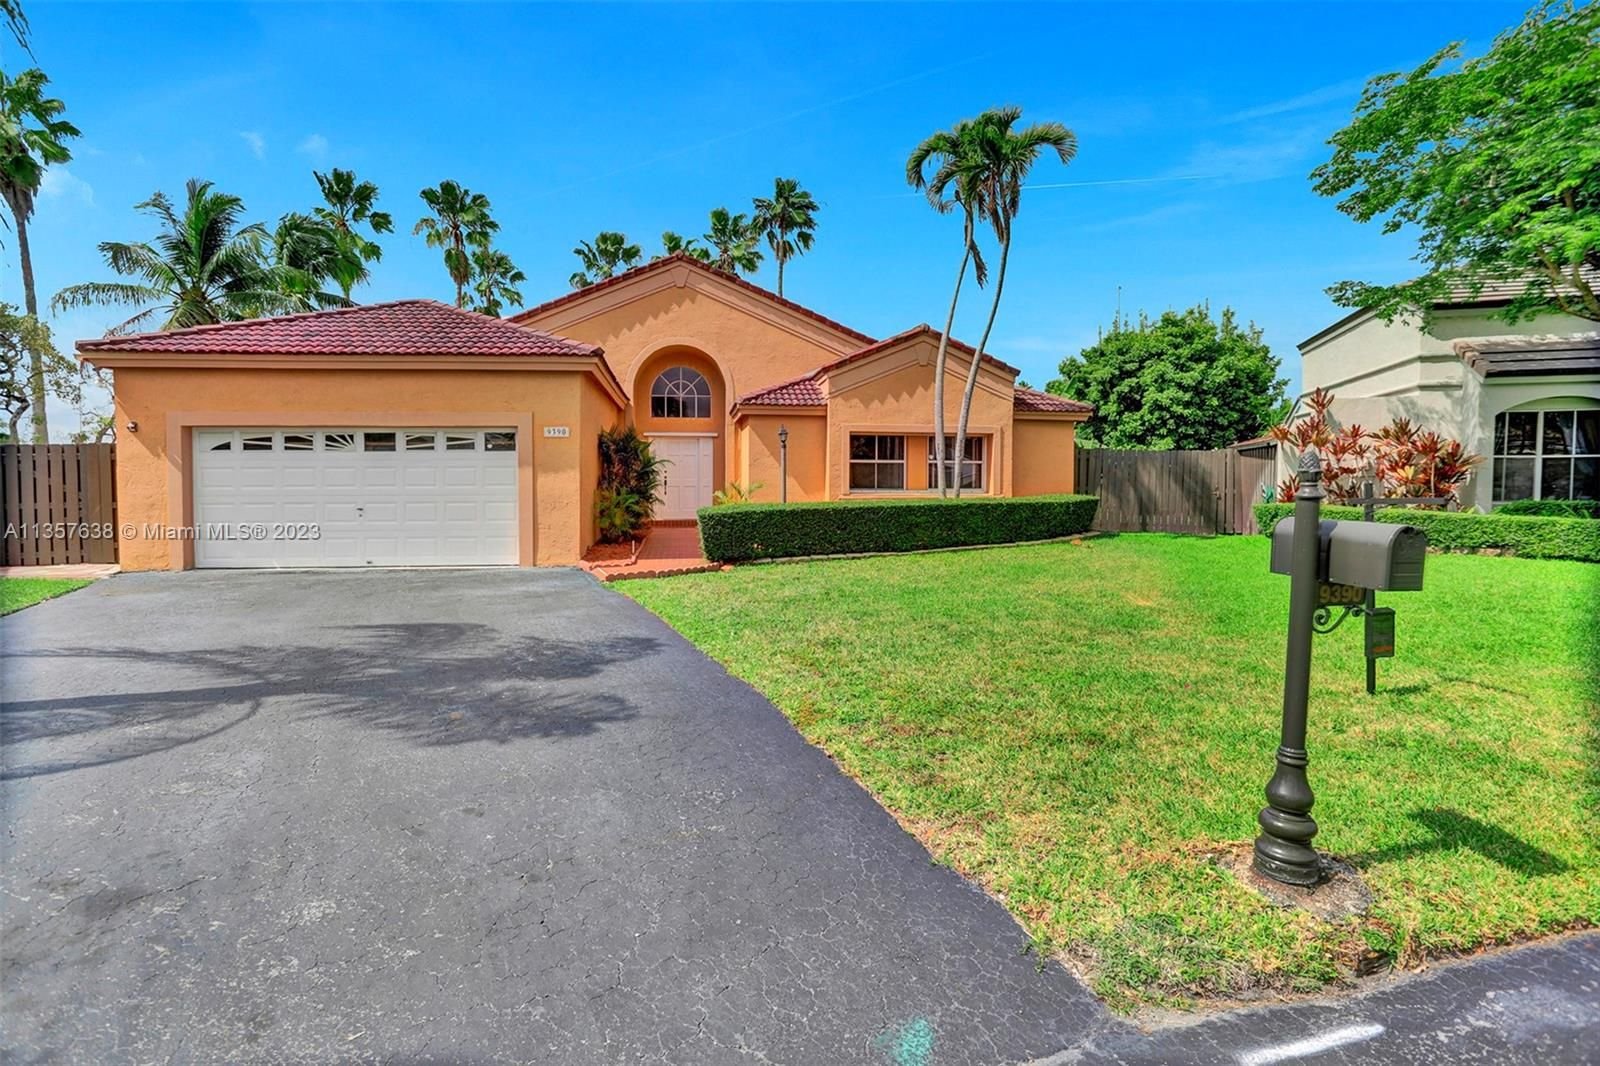 Real estate property located at 9390 118th Pl, Miami-Dade County, Miami, FL